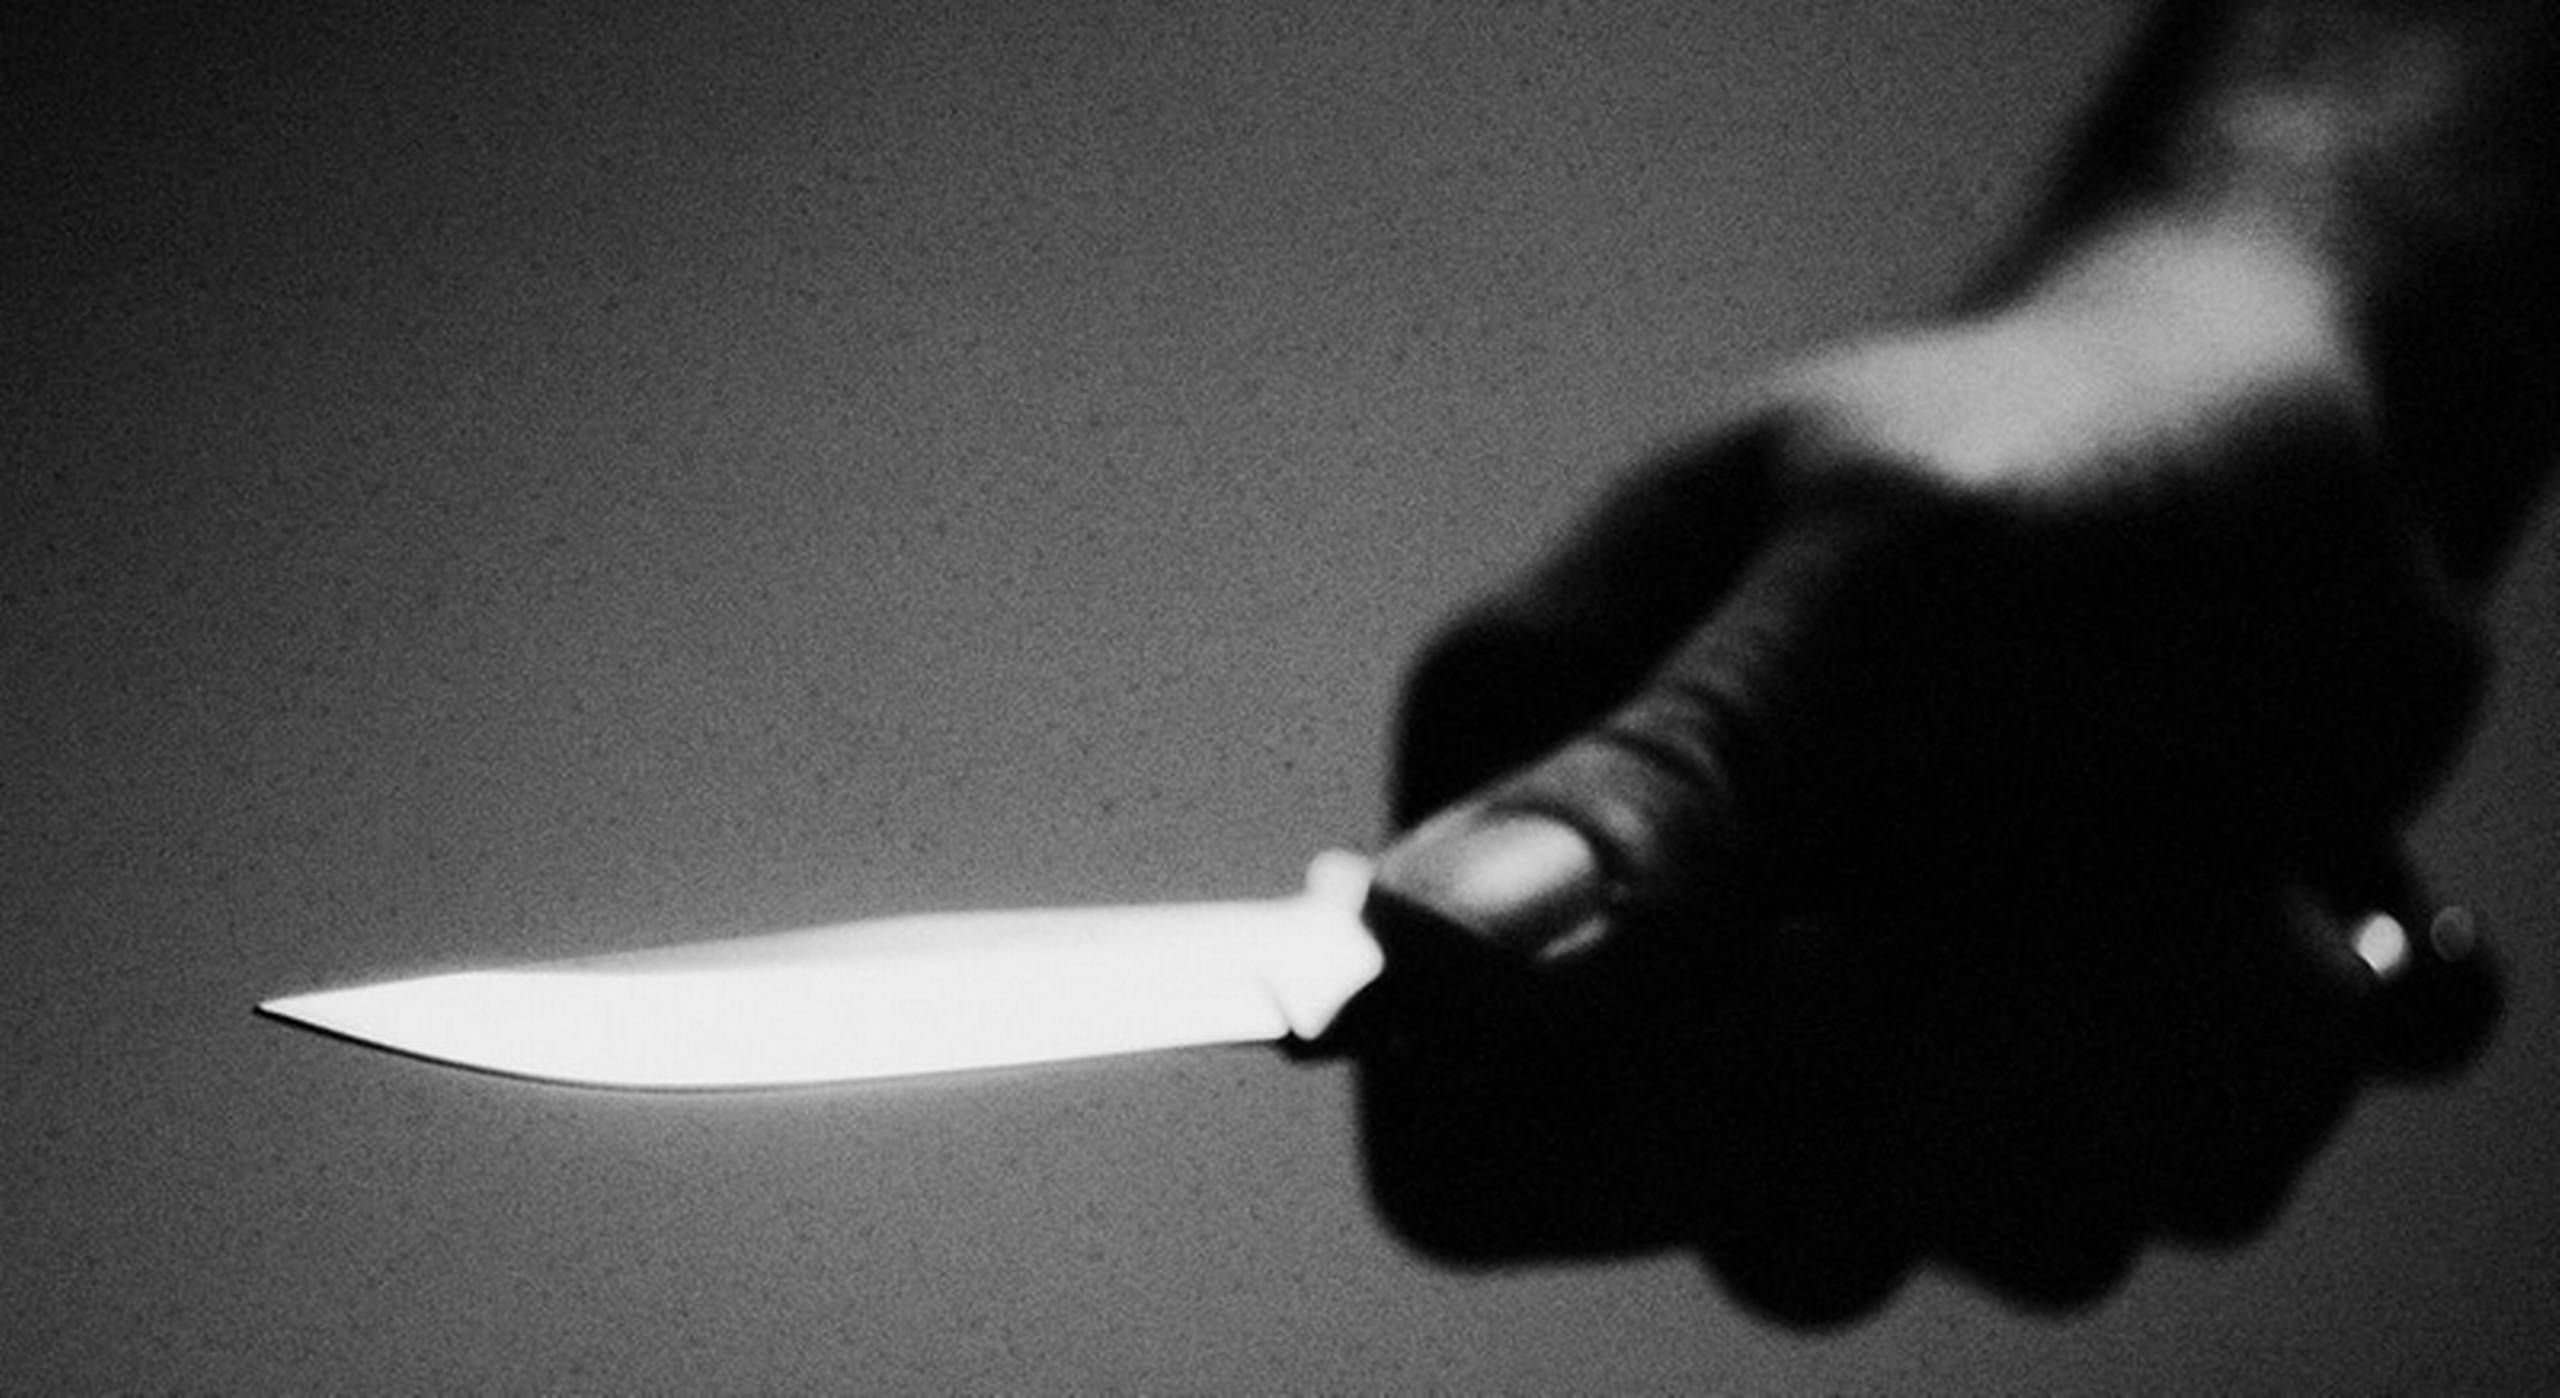 Perennial Symposium Vugge Netto-røvere truede med kniv